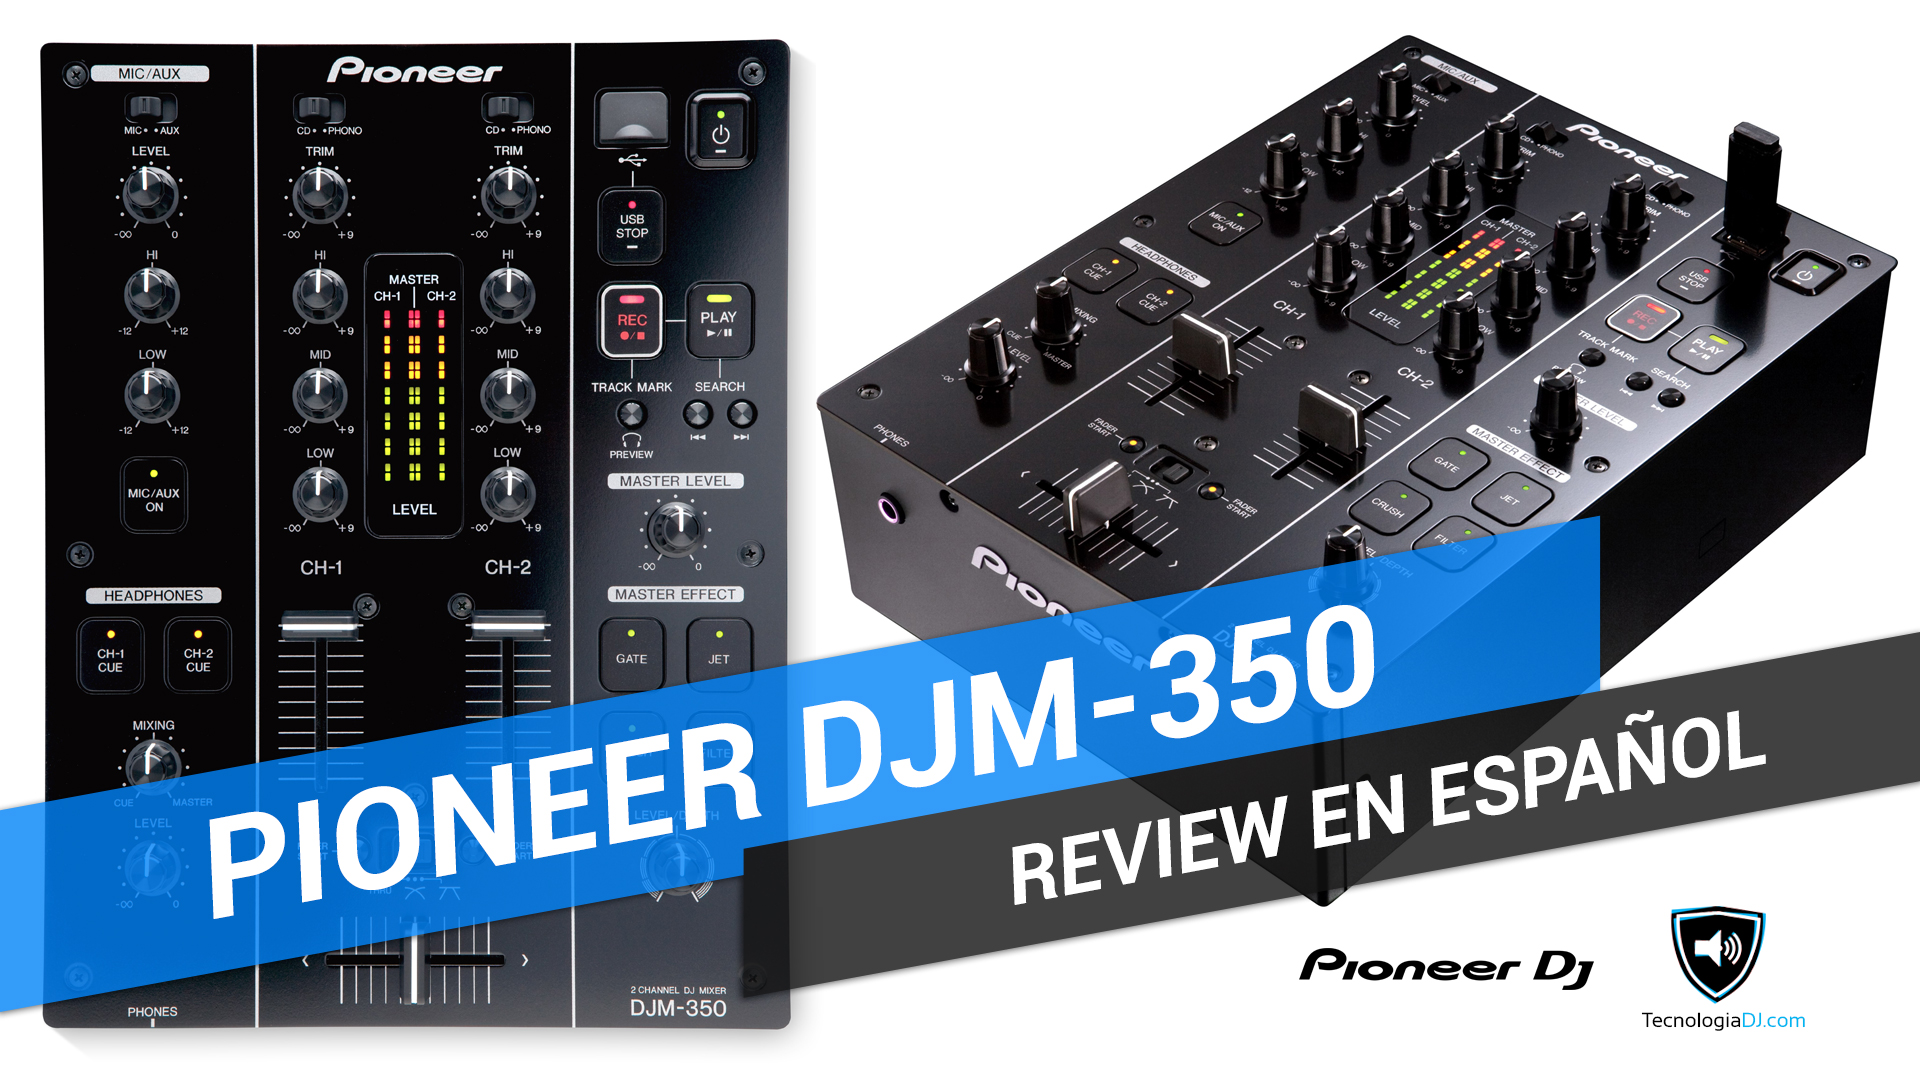 Review en español mixer Pioneer DJM-350